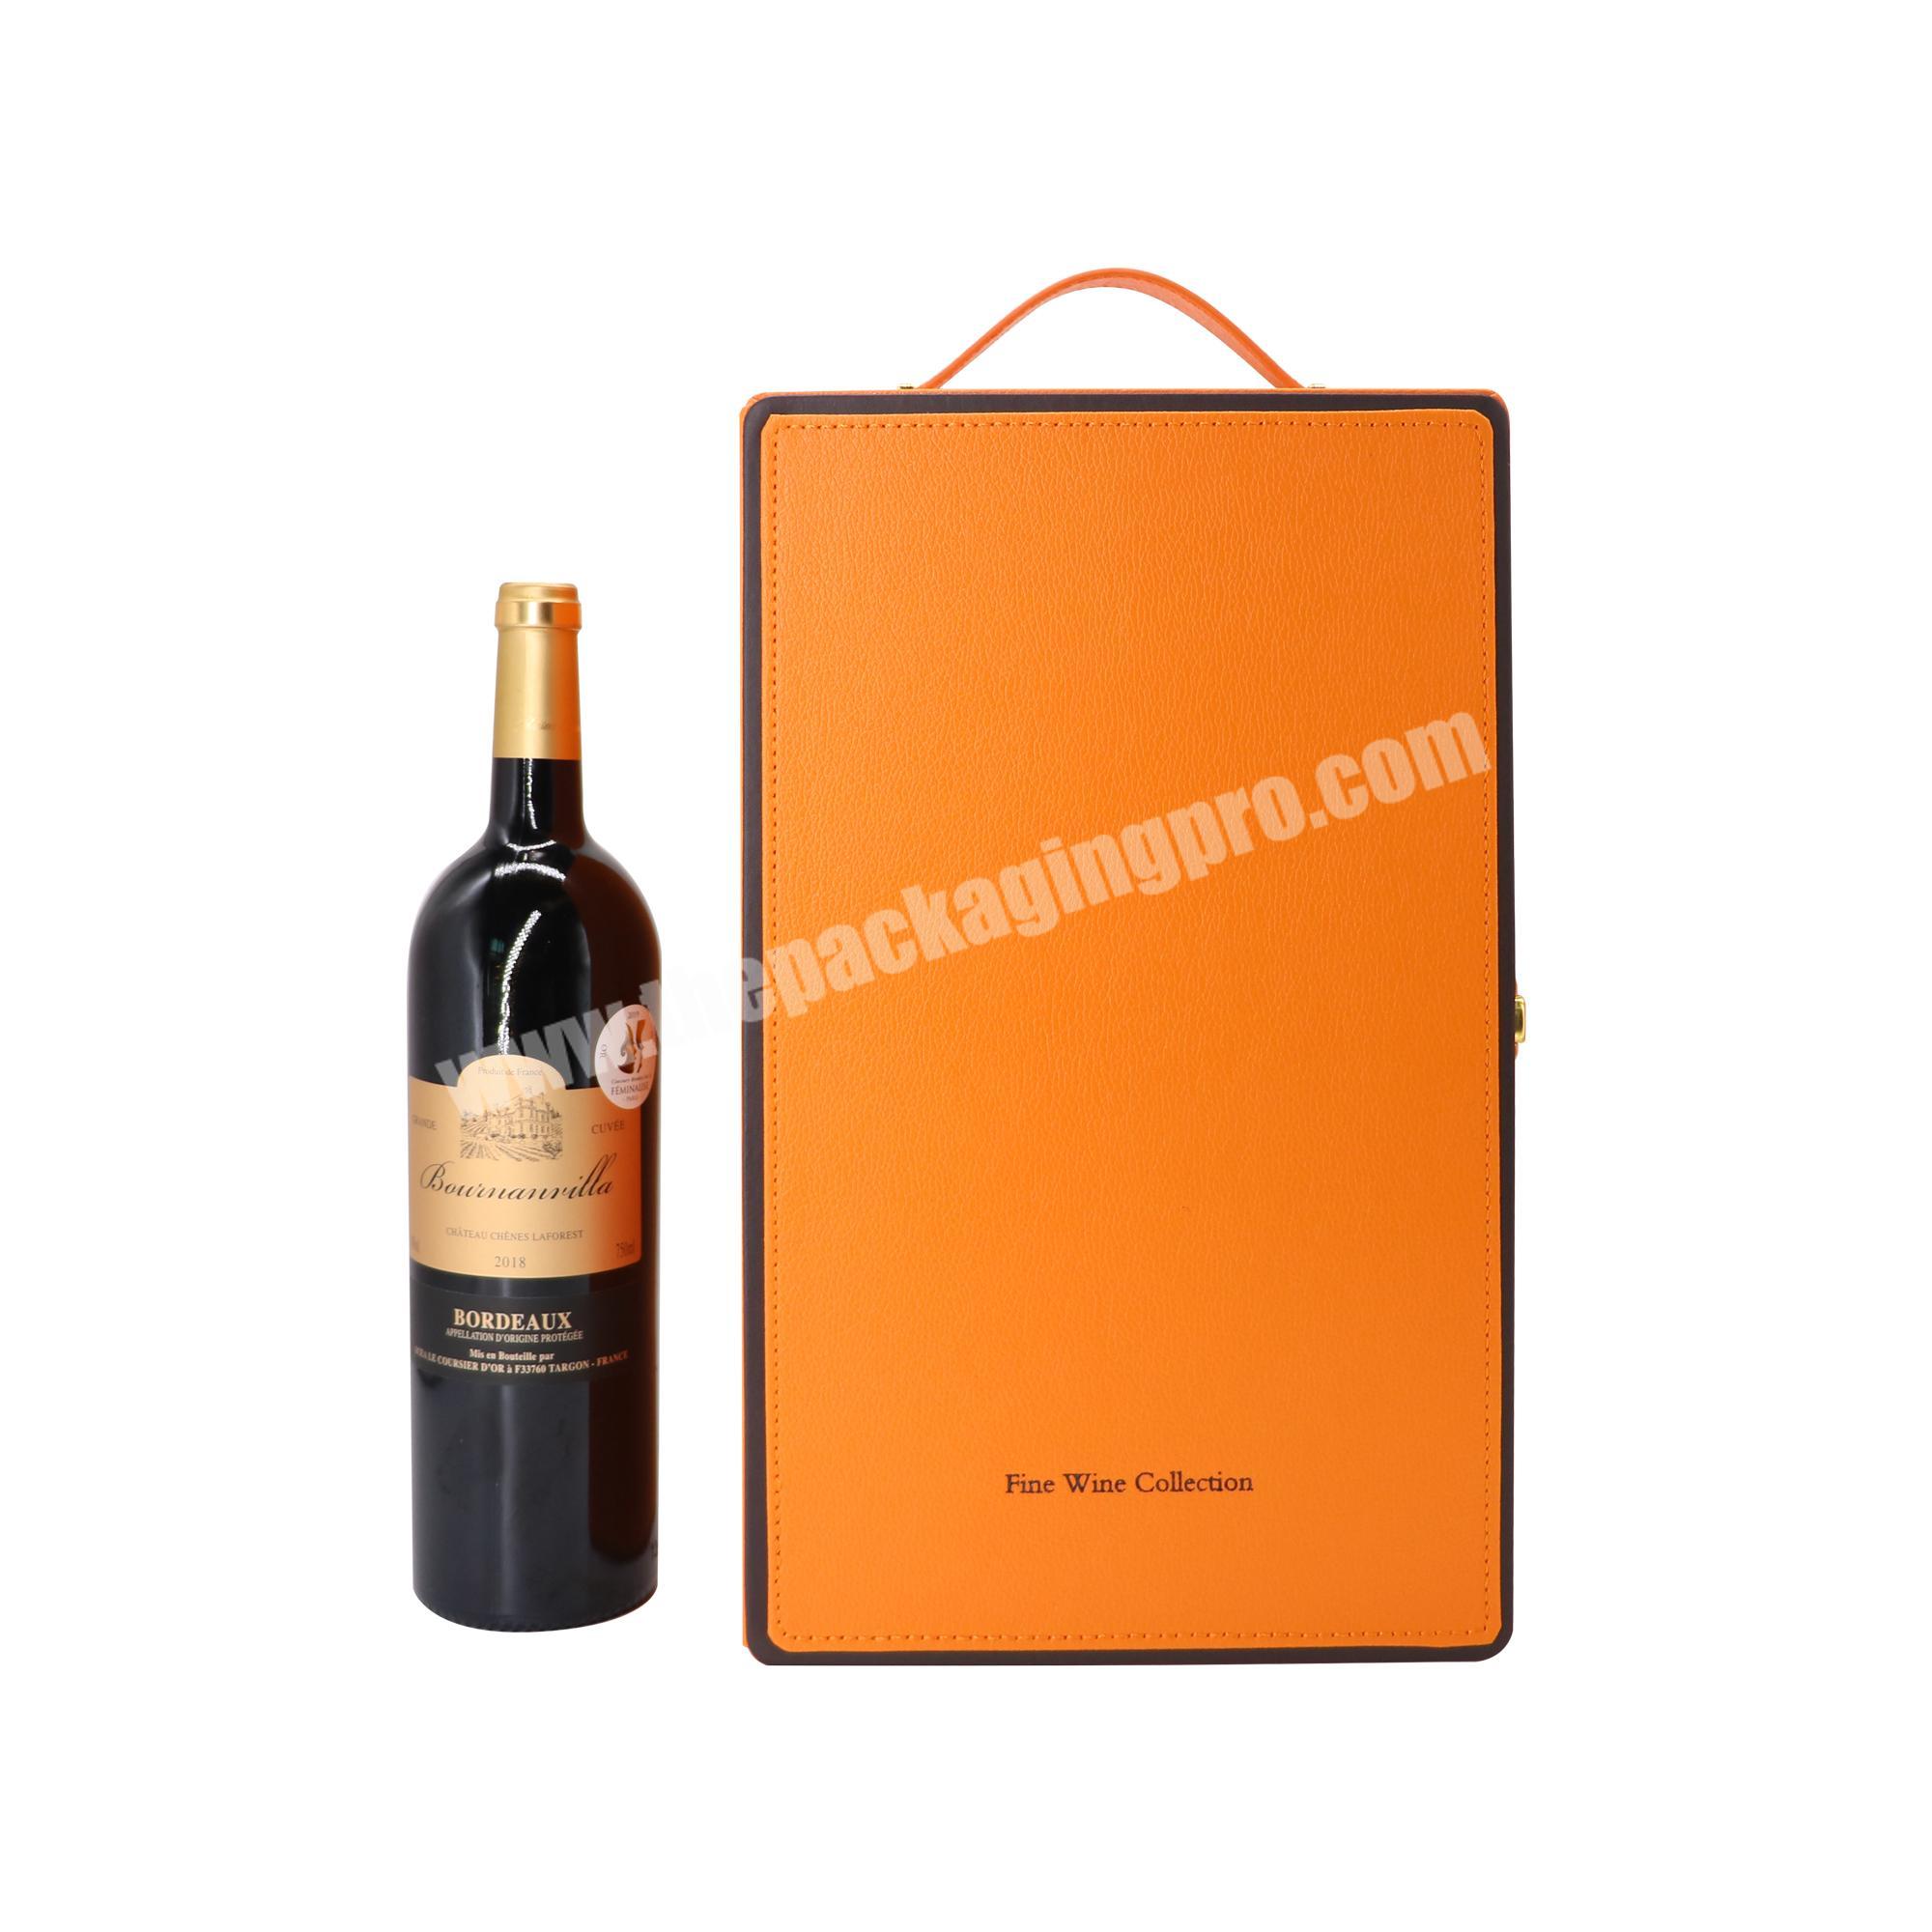 Hot sale wooden box wine packaging wine box 2 bottles luxury wood spirit wine box